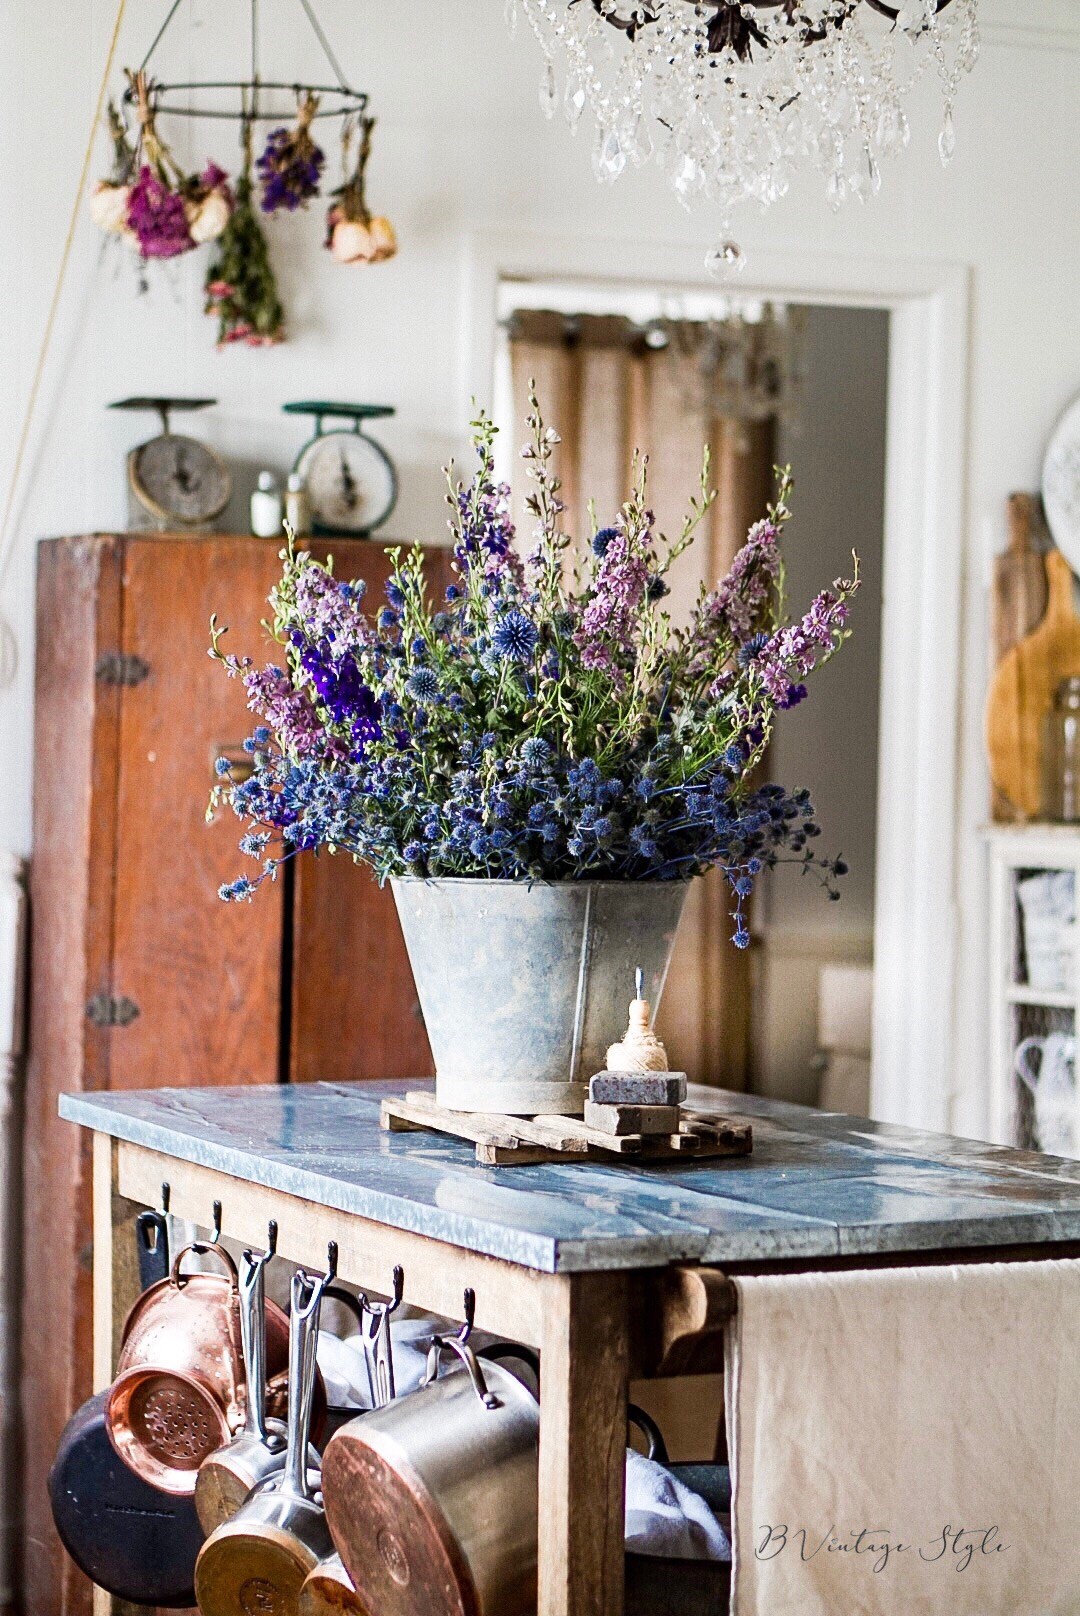 Beautiful old kitchen with wood island kellyelko.com #kitchen #farmhousekitchen #flowers #farmhousestyle #kitchens 